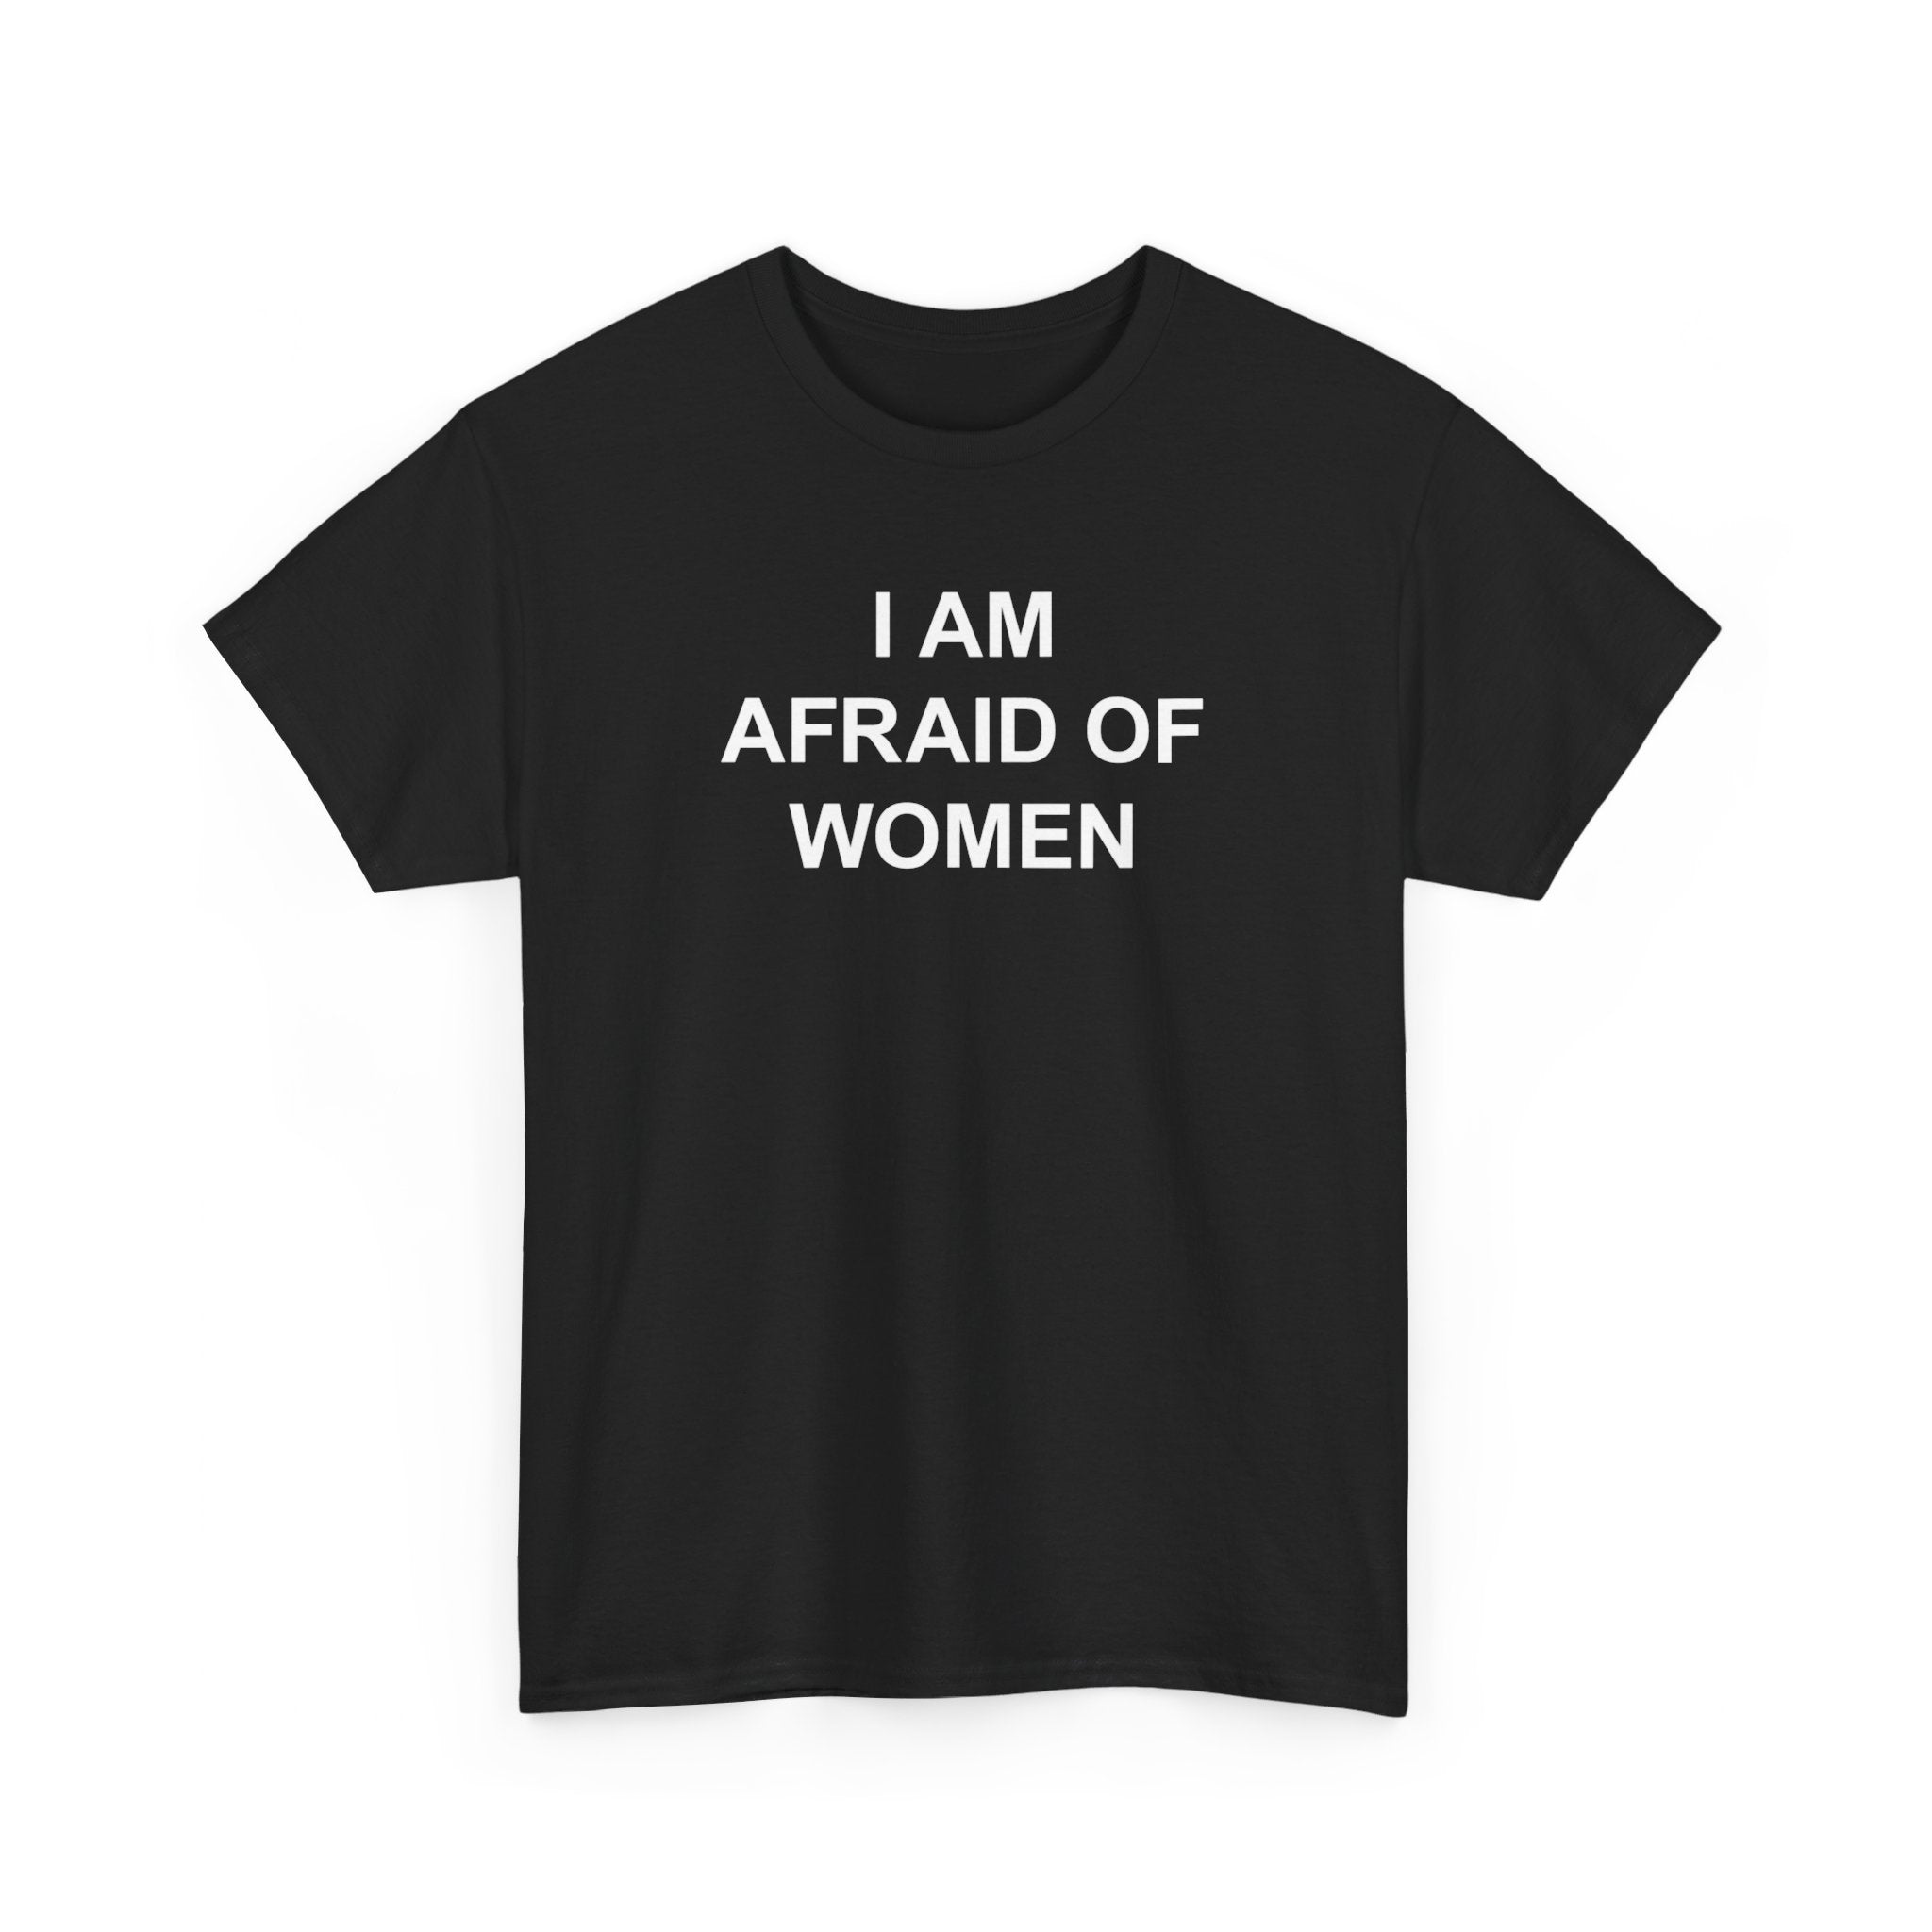 I AM AFRAID OF WOMEN T-SHIRT